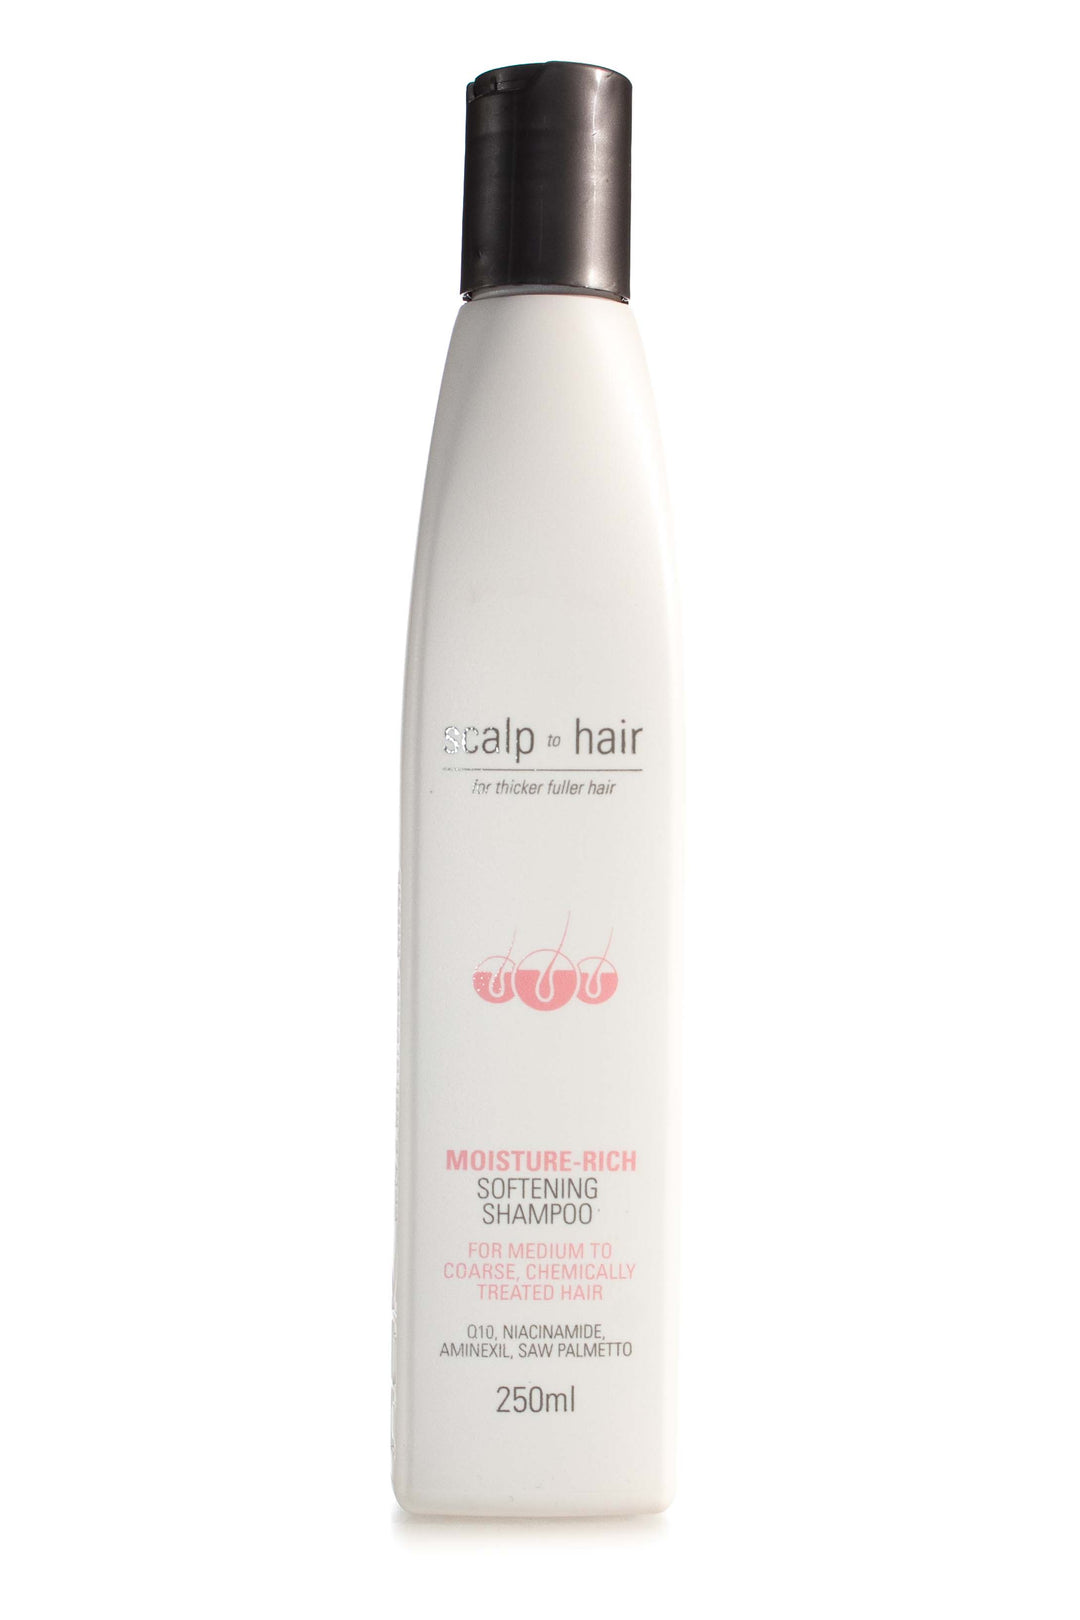 nak-hair-scalp-to-hair-moisture-rich-softening-shampoo-250ml